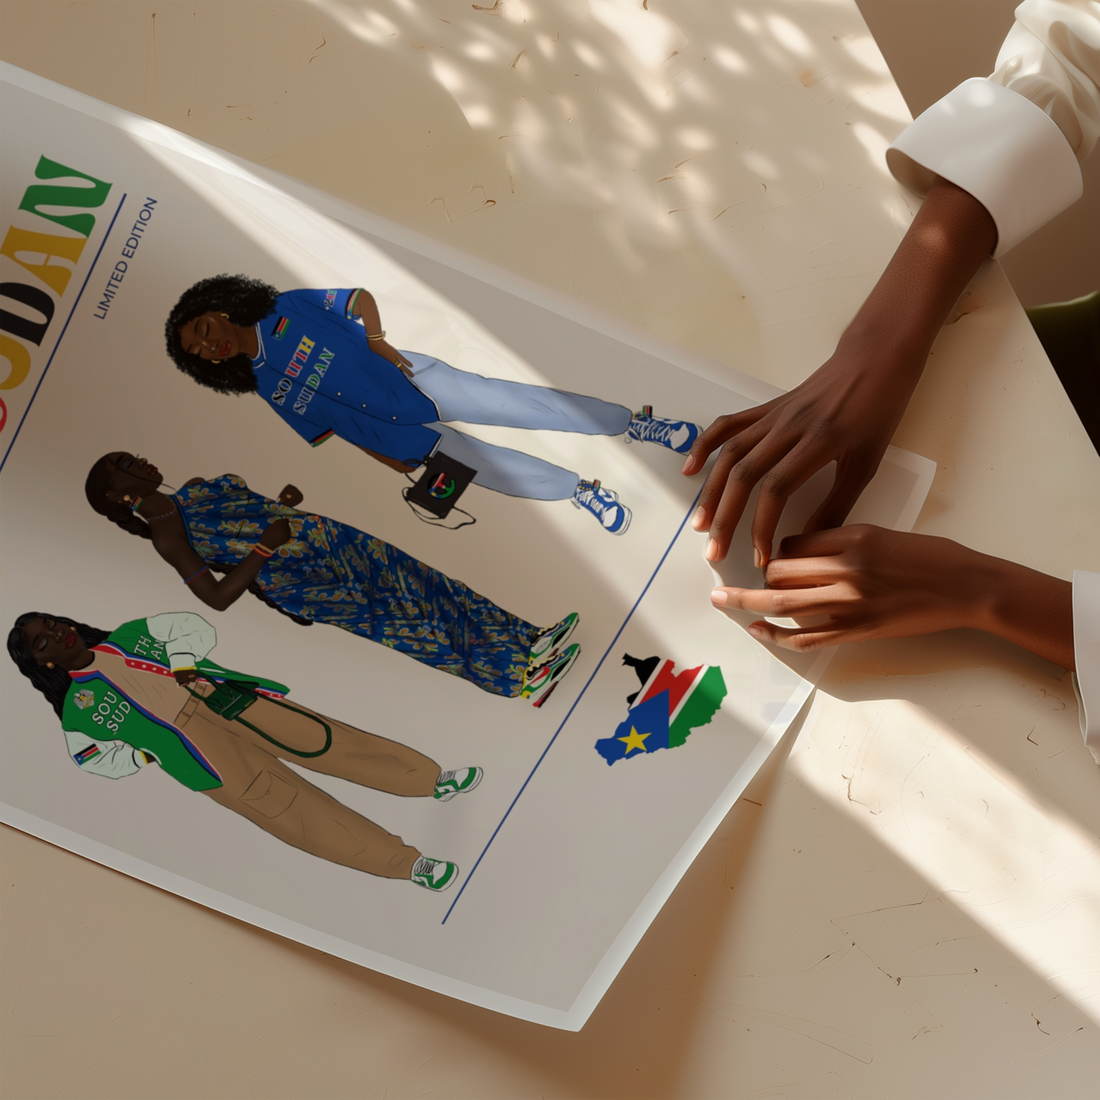 South Sudan x Streetwear - Matte Vertical Posters